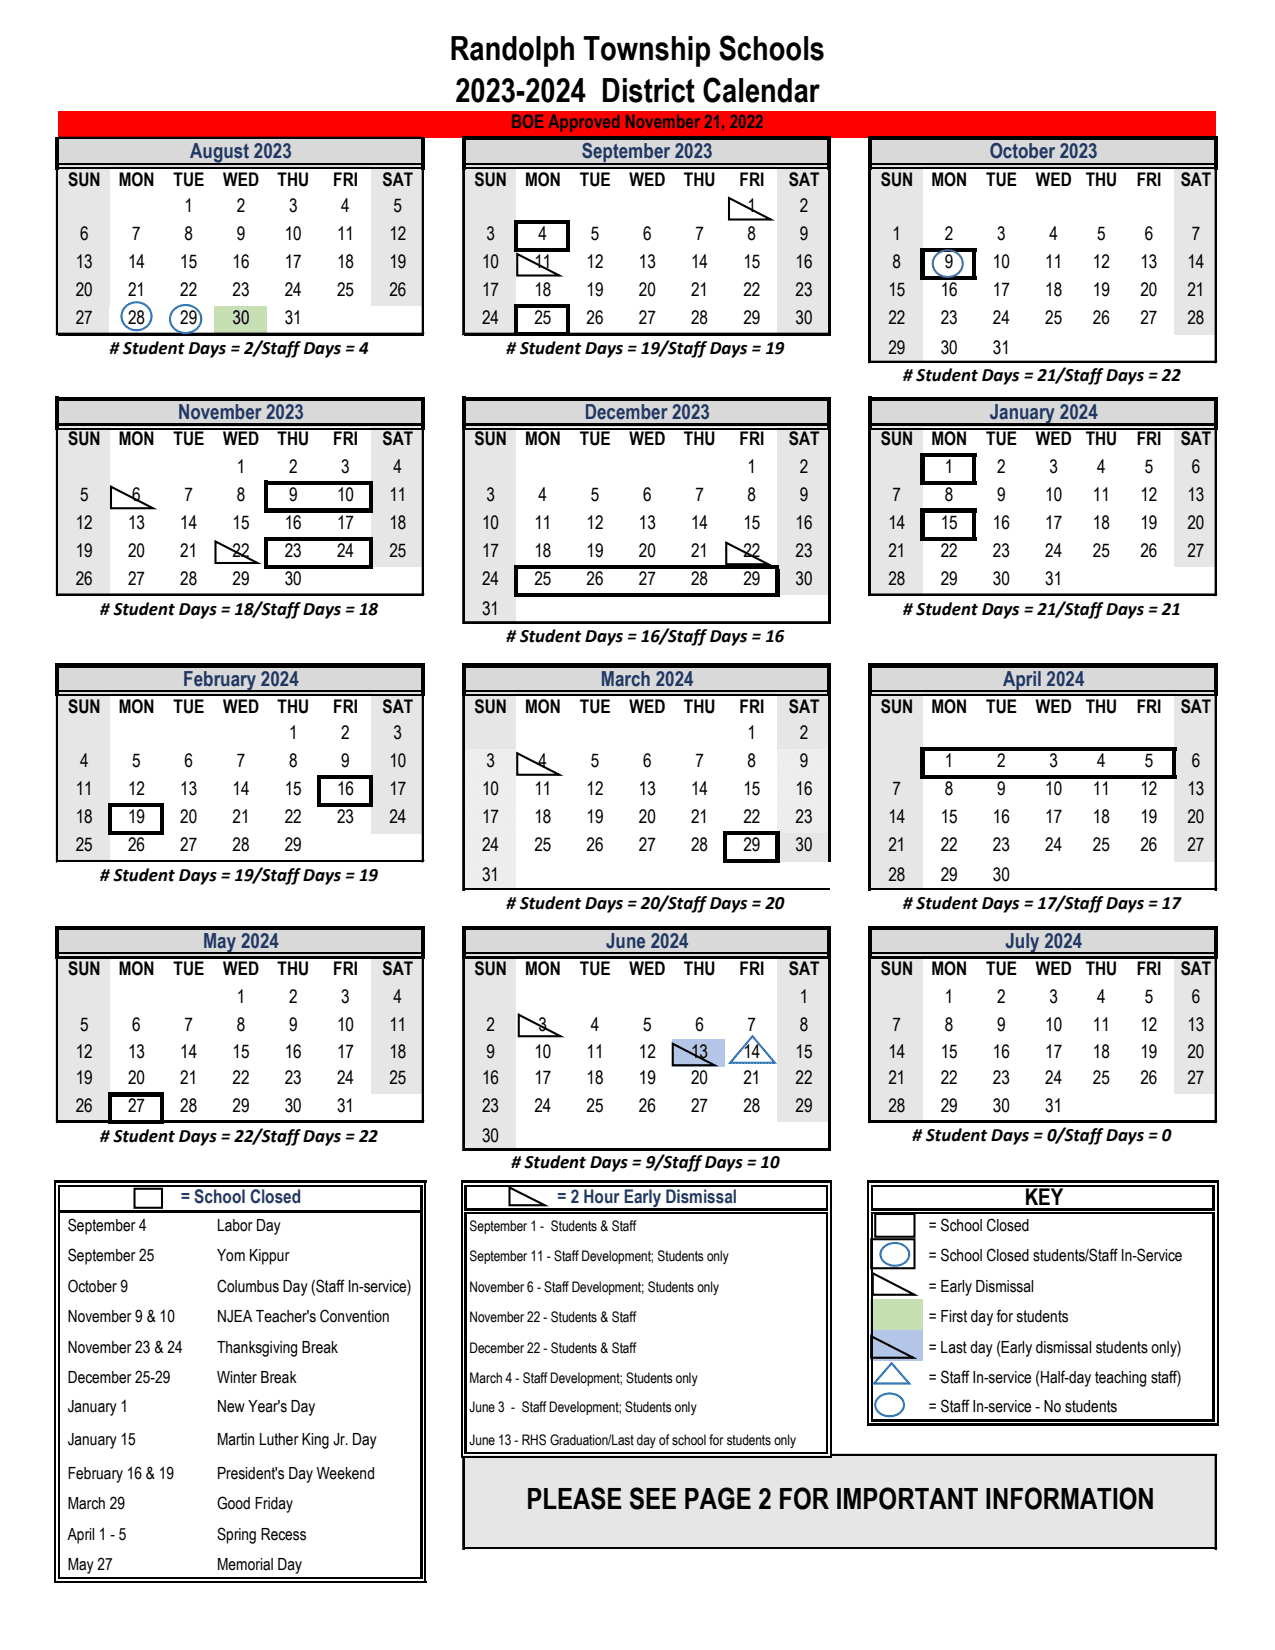 Randolph Township School District Calendar 2024 2025 in PDF